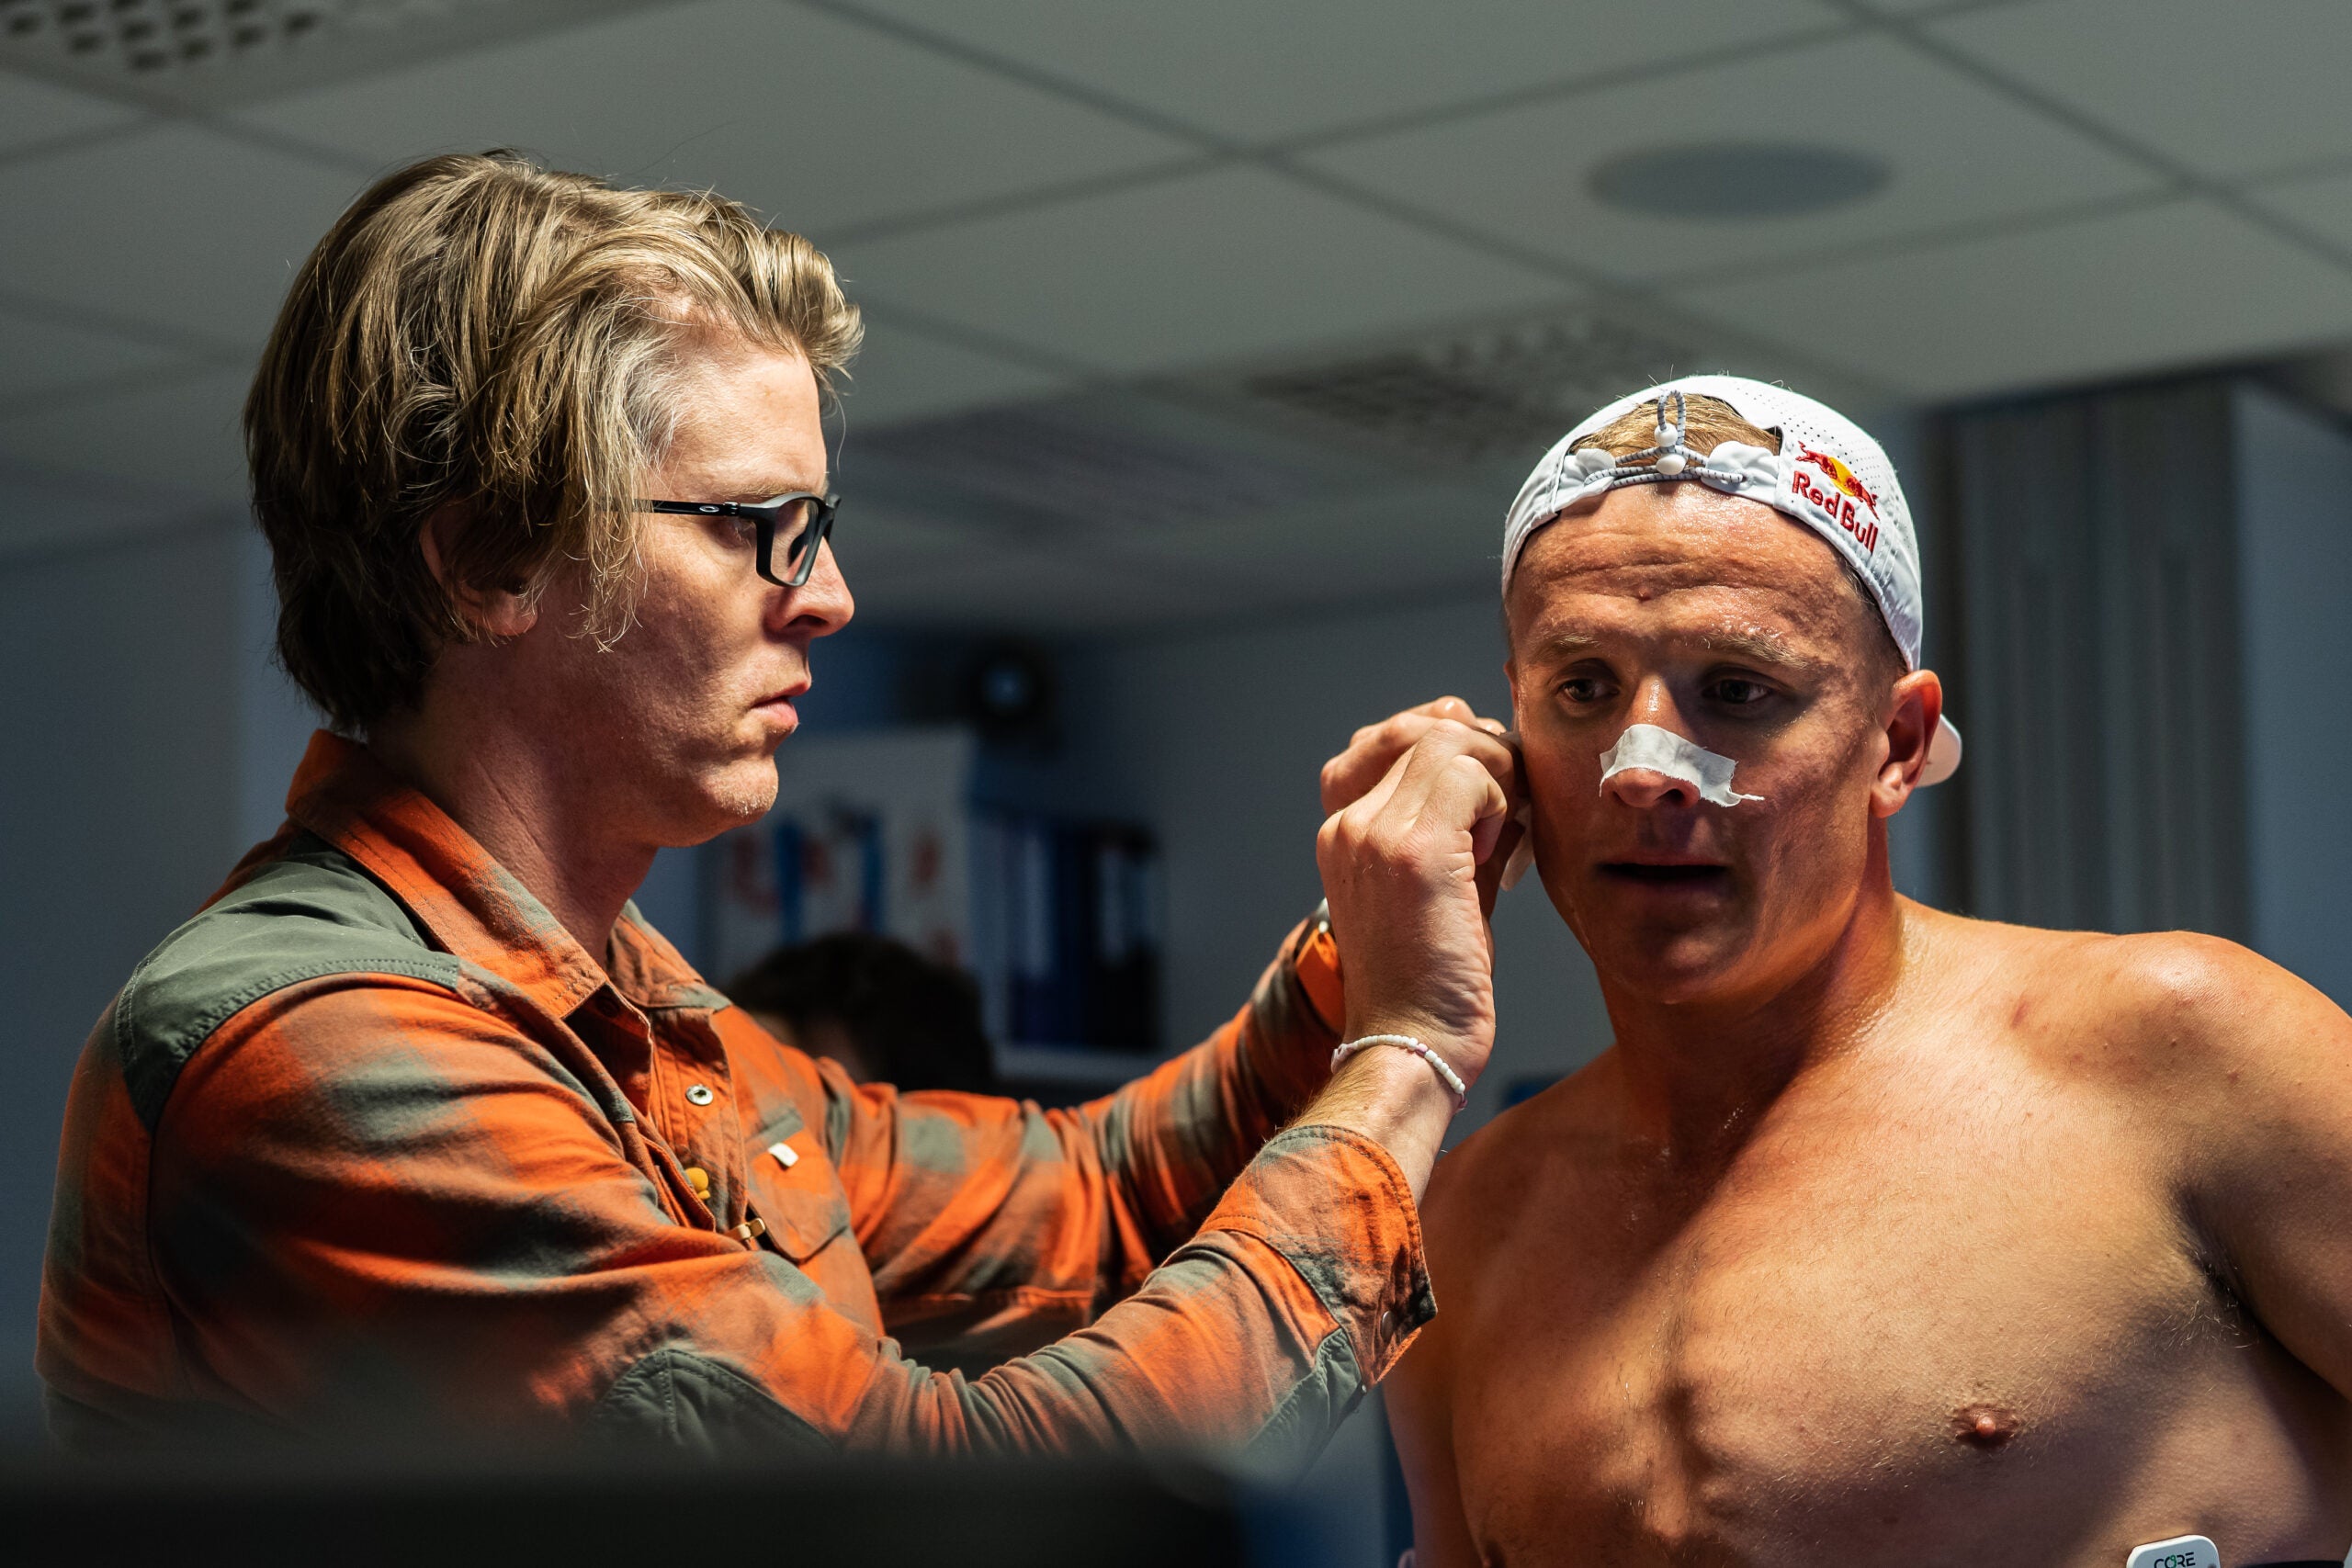 Olav Bu Norwegian Triathlon Coach does lactate testing